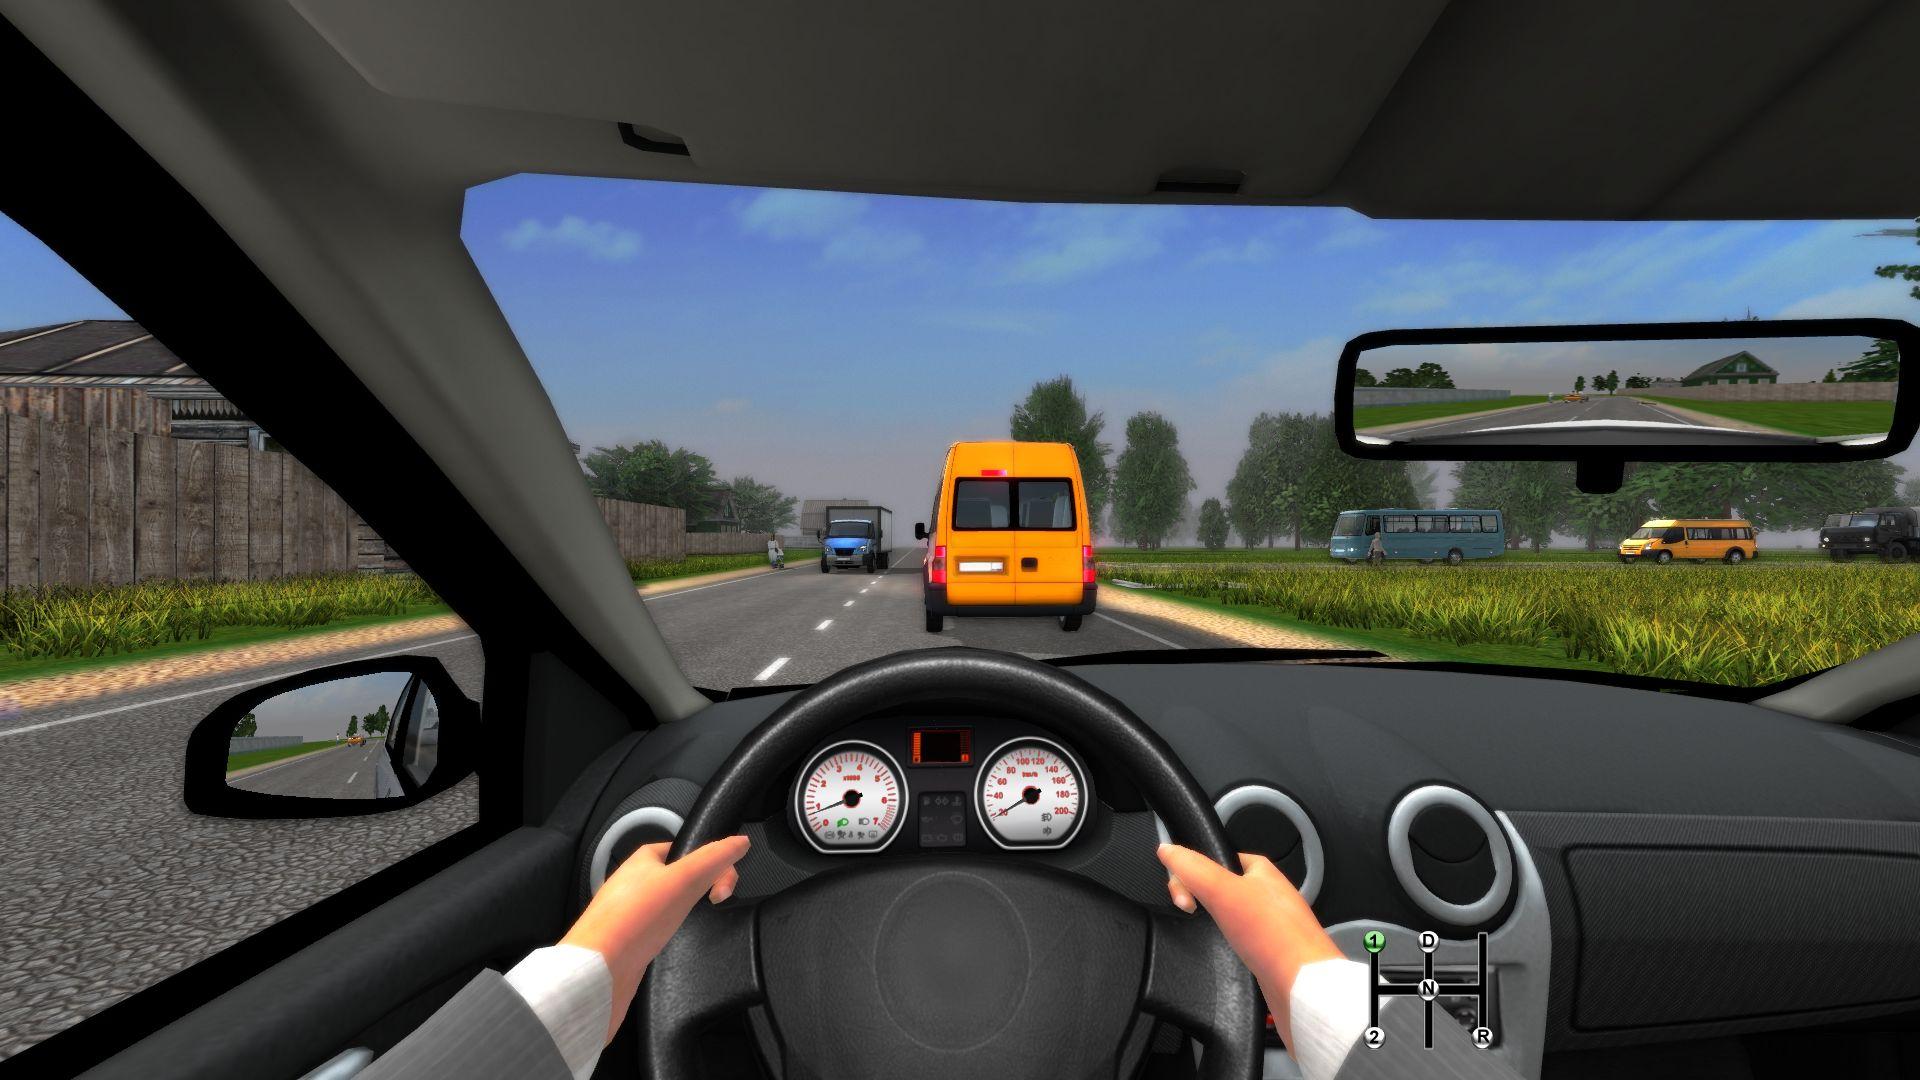 Screenshot №6 from game Drive Megapolis